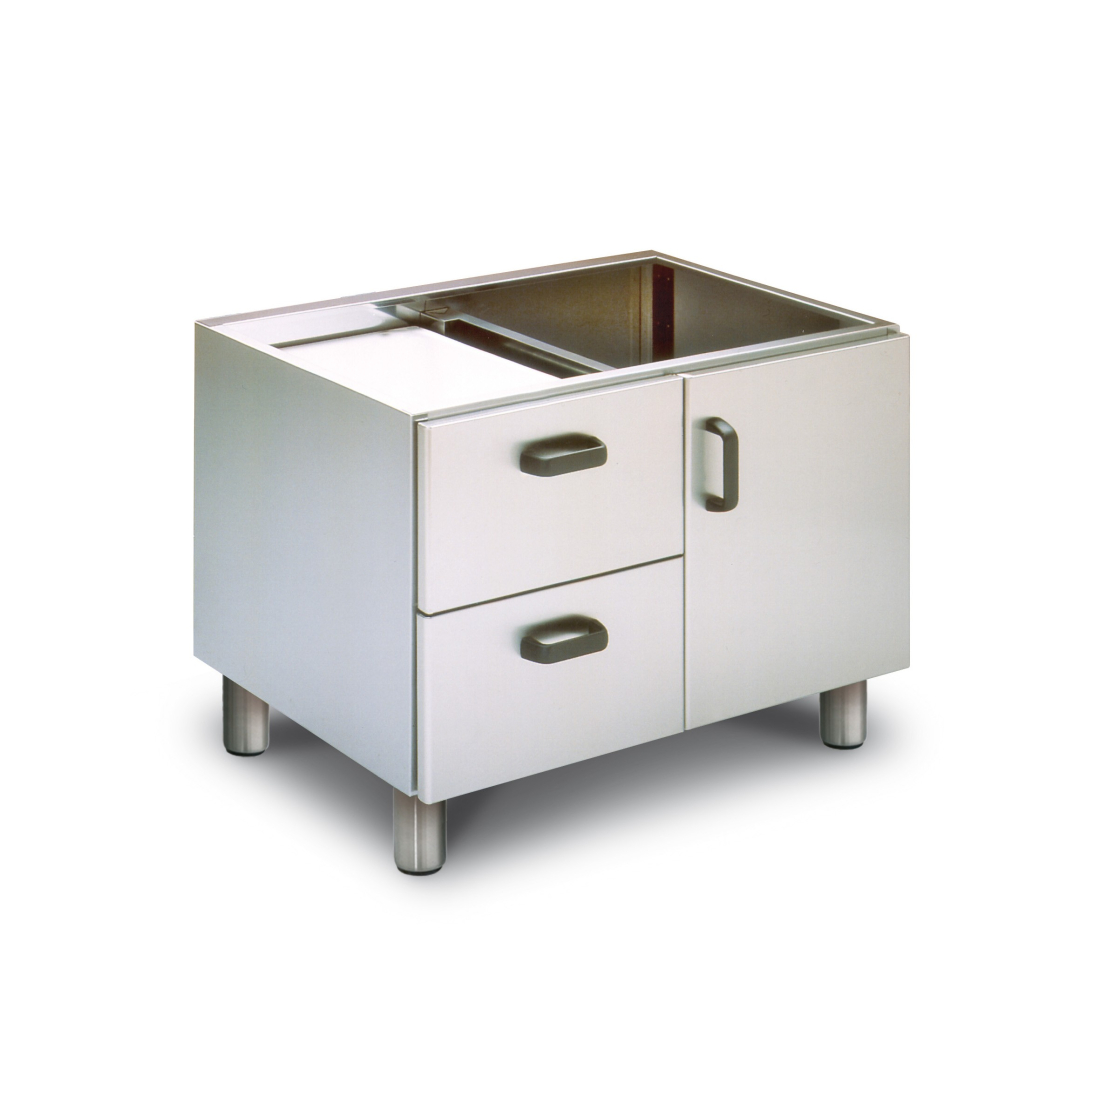 LOTUS L23-MCP Stainless Steel Cabinet LOTUS® Food Catering Equipment Fryer Wok Steam Oven